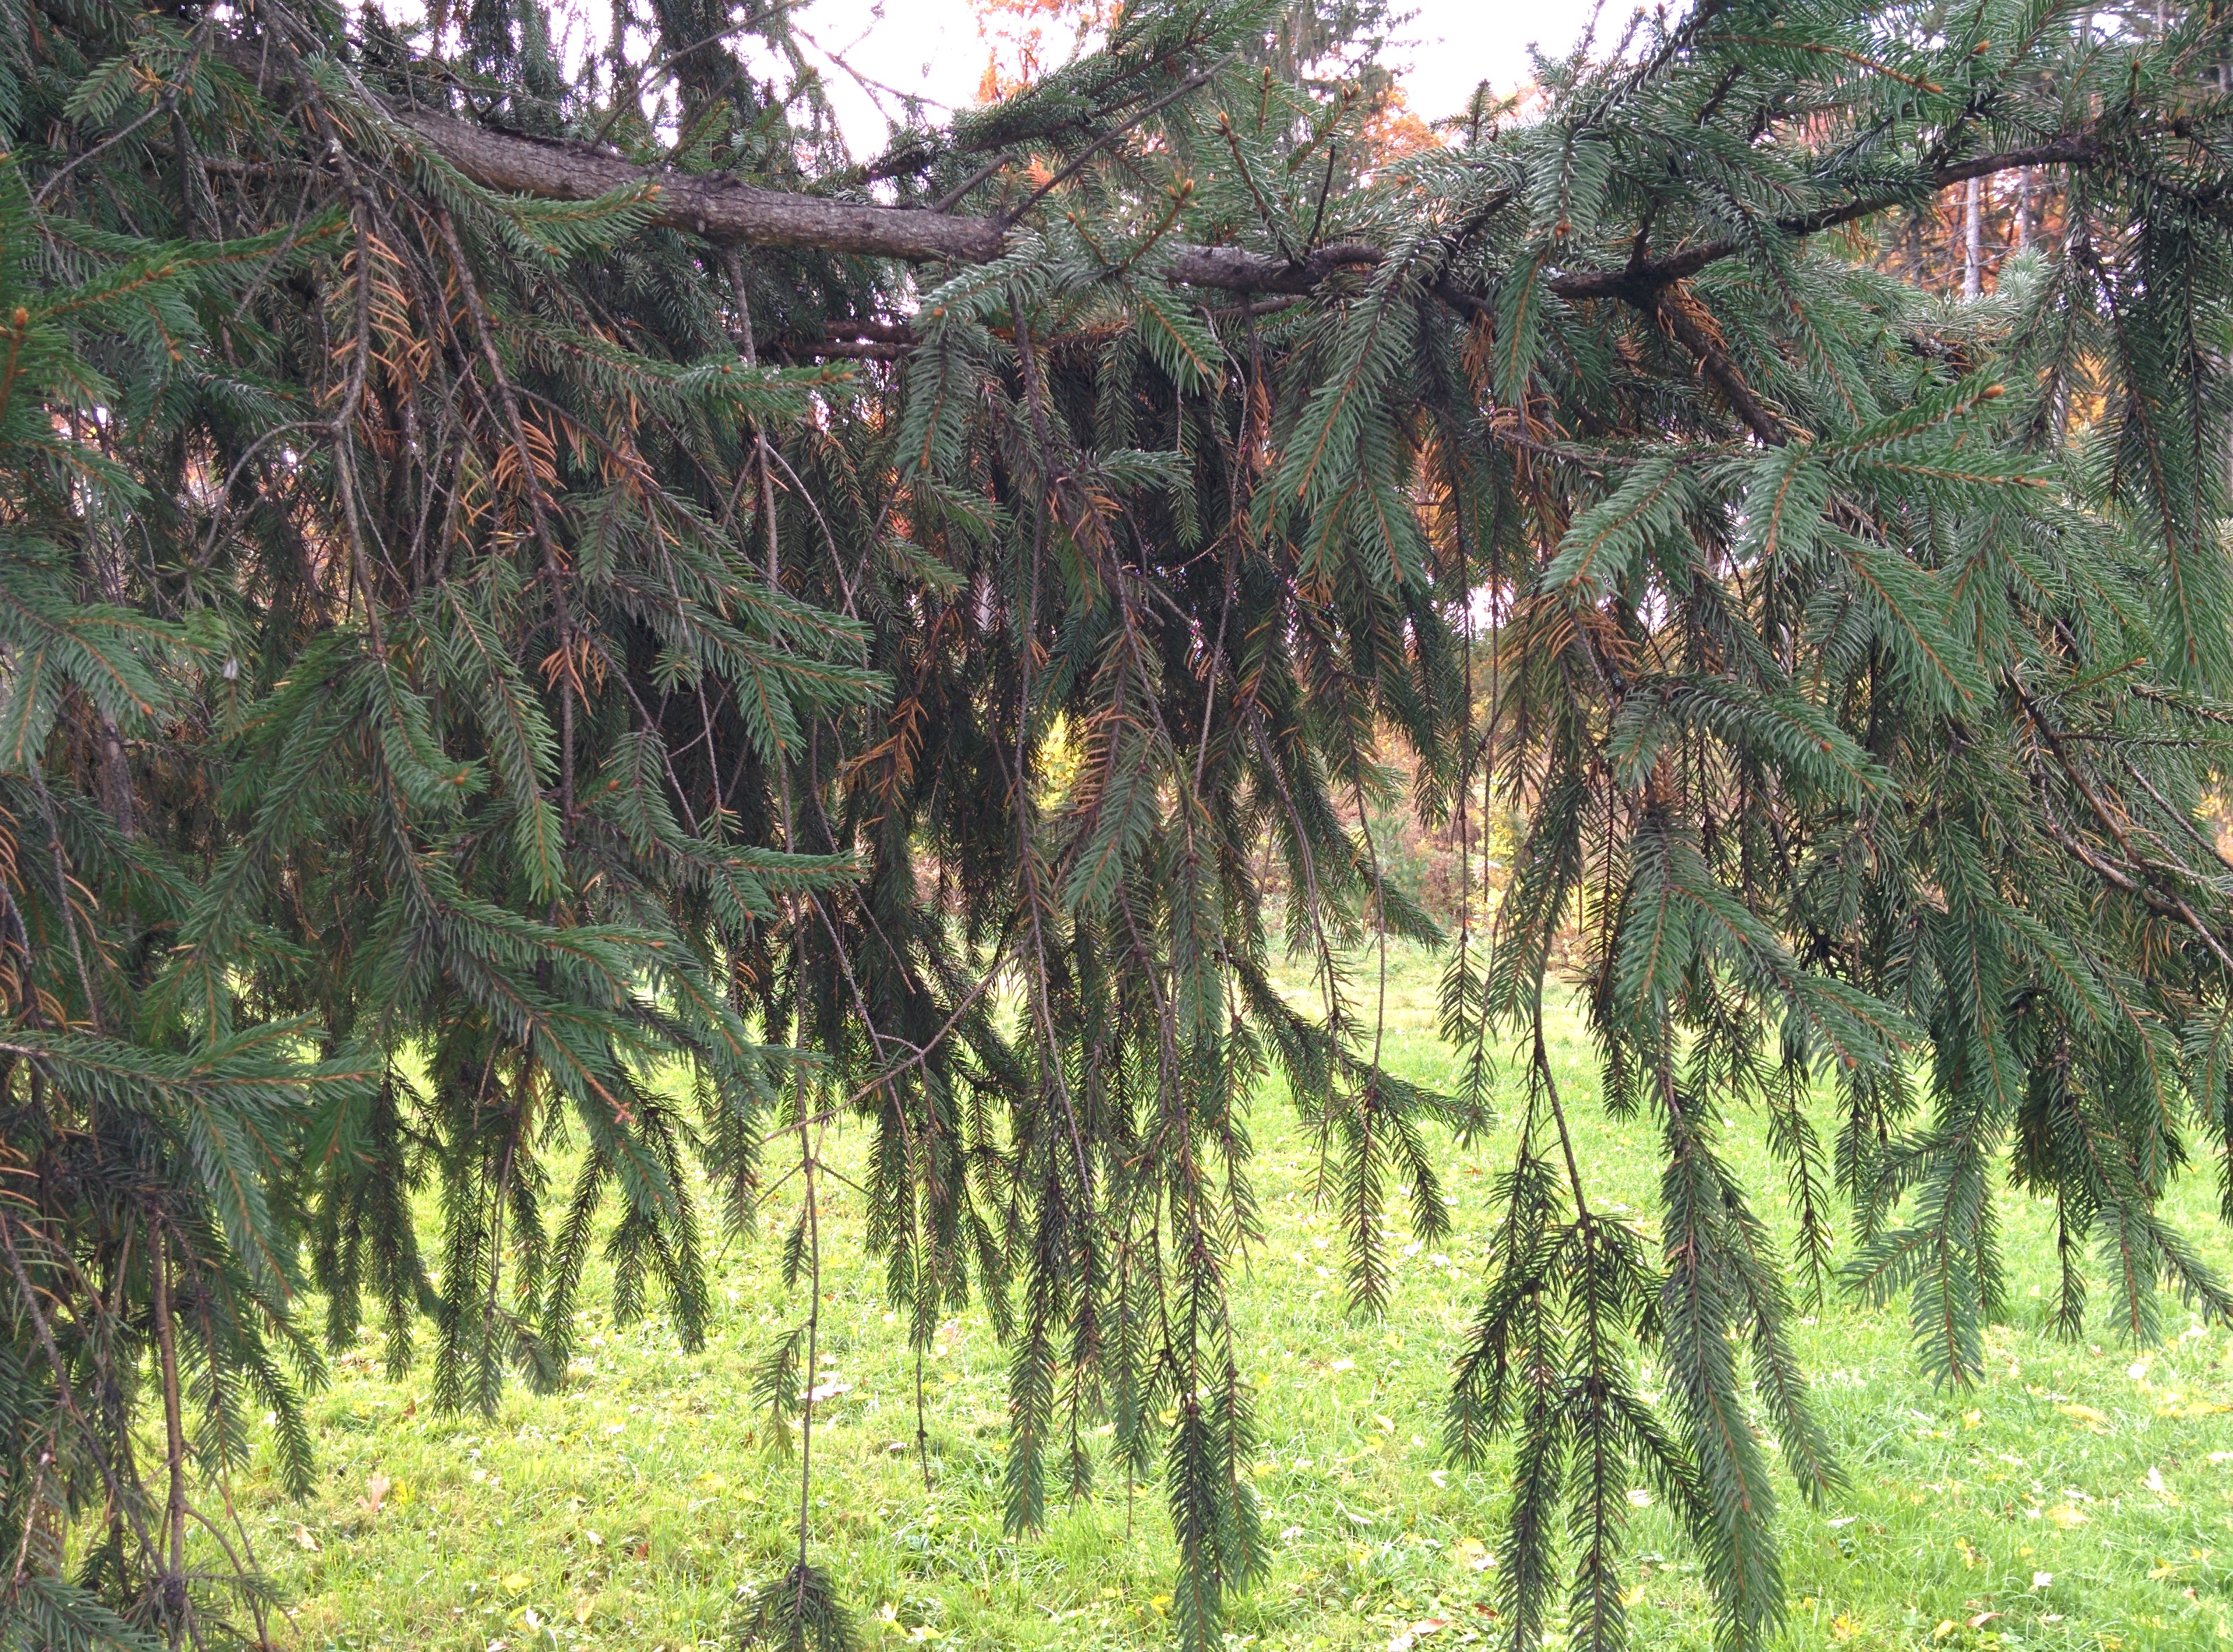 Norway spruce branch